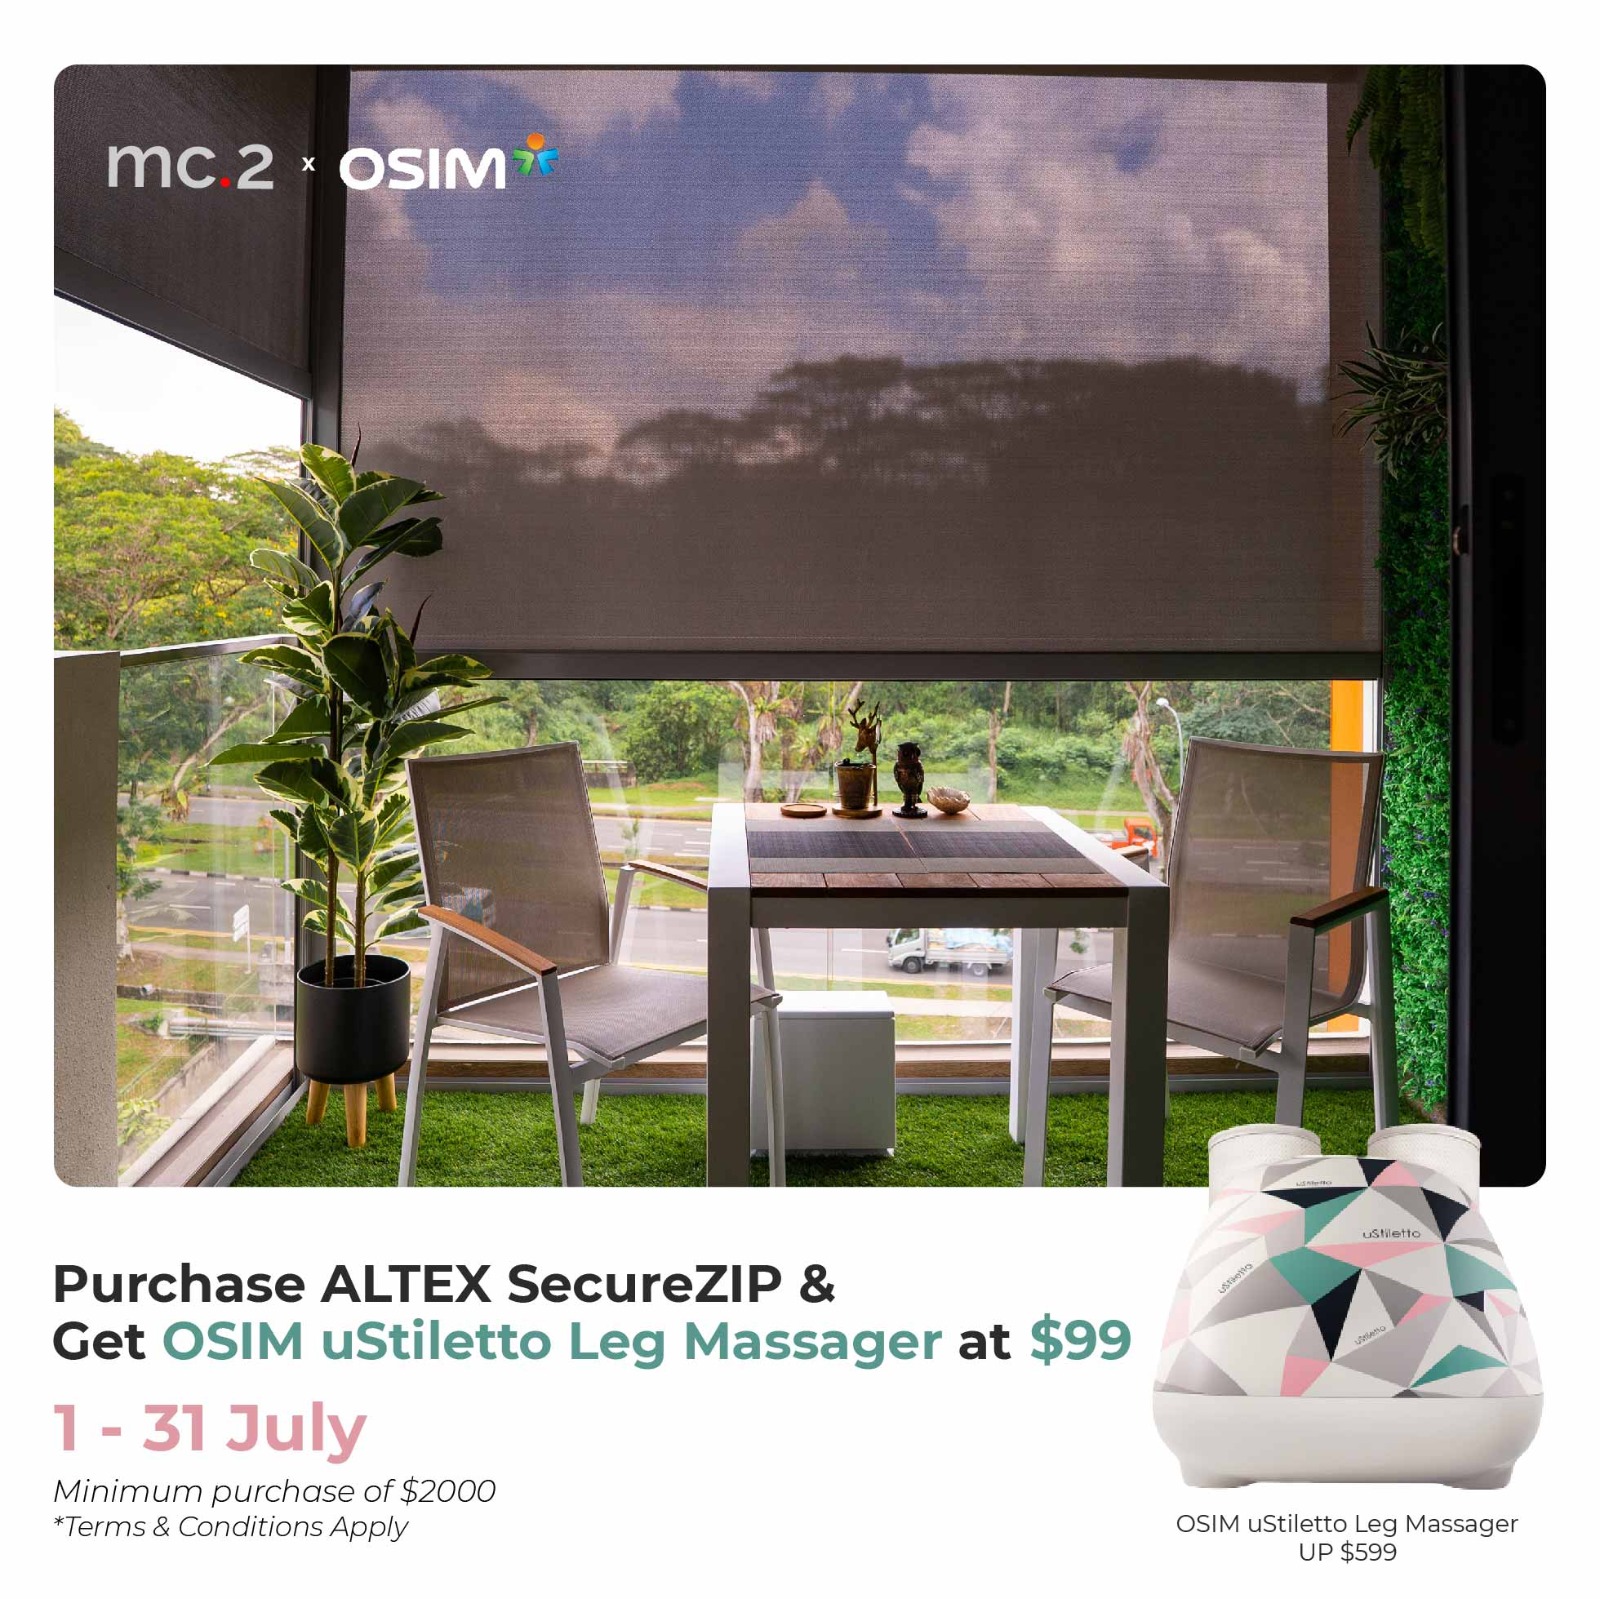 mc.2 x OSIM Promotion (until 31 July 2020)